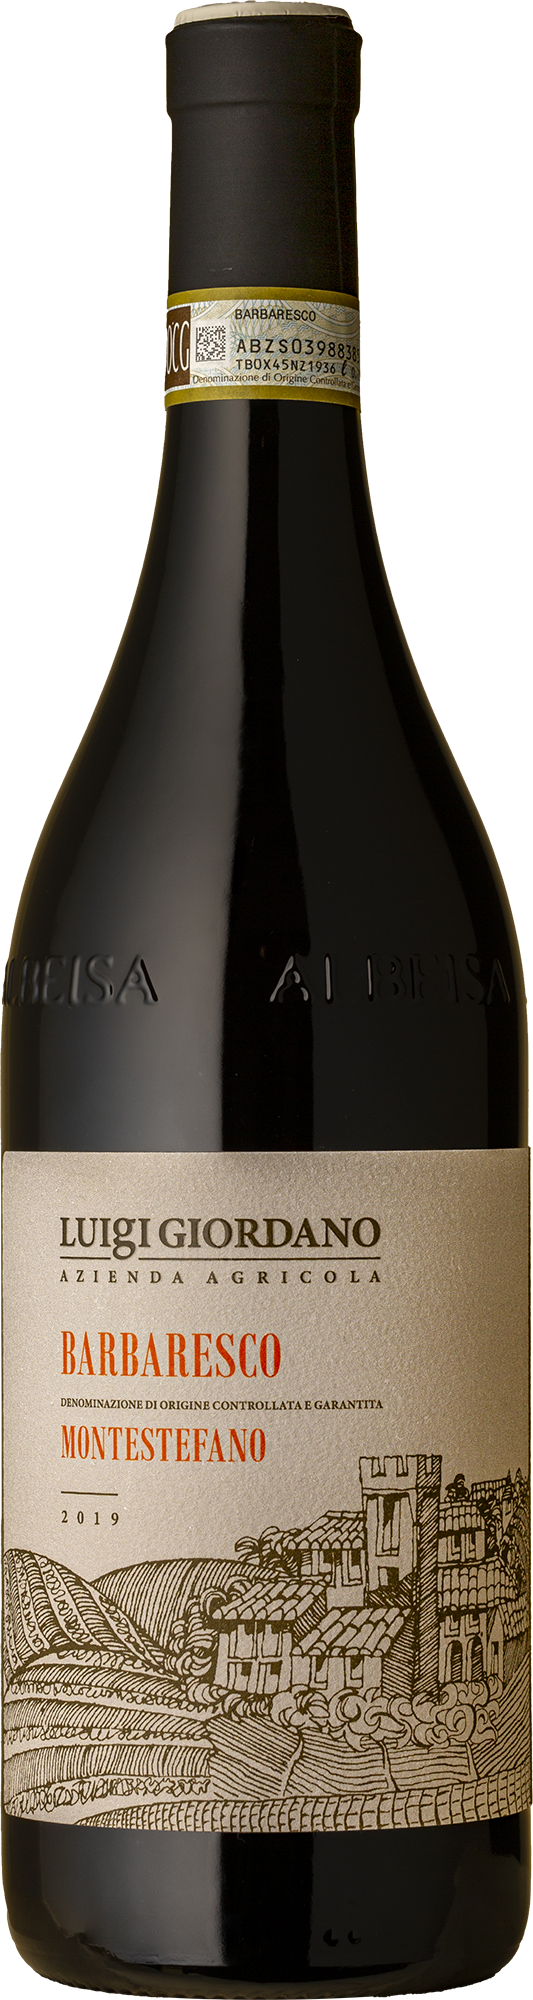 Luigi Giordano - Montestefano Barbaresco 2019 Red Wine